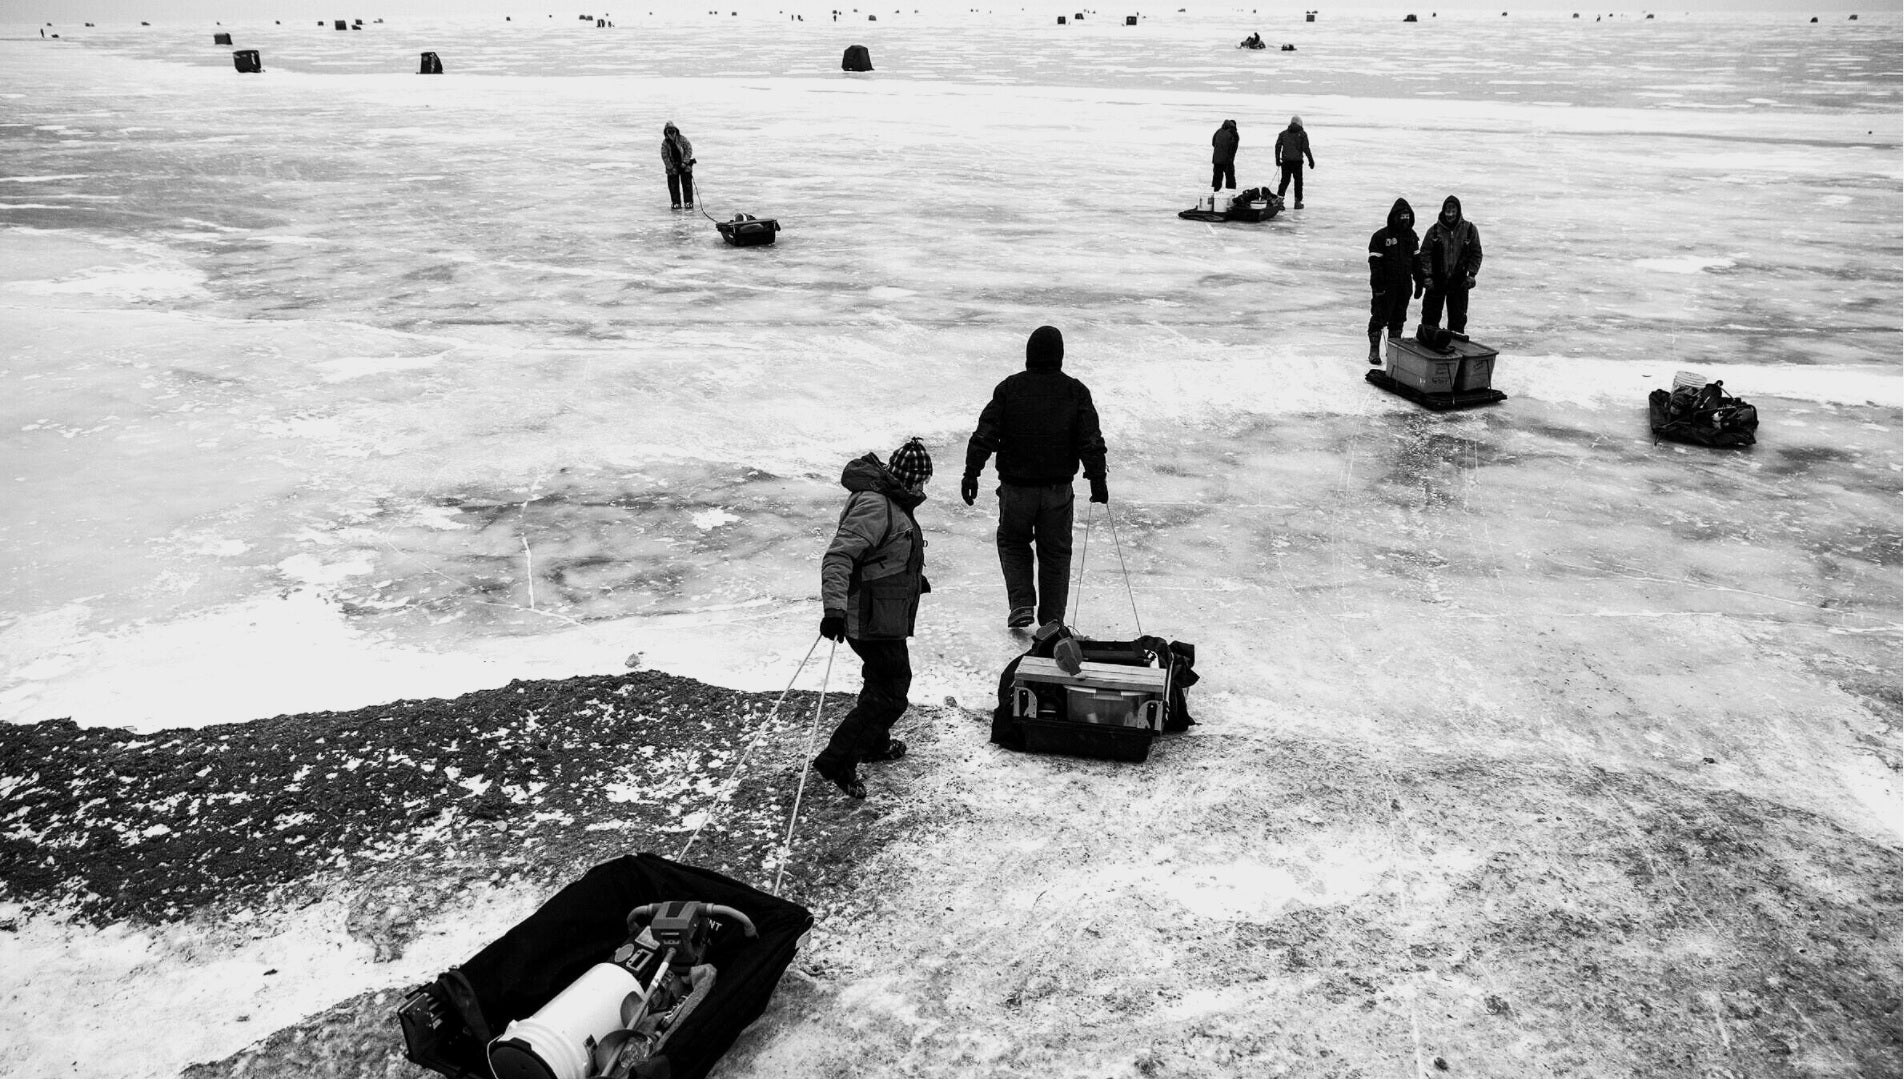 Last Ice Art Exhibit of Michigan’s Ice Fishing Culture